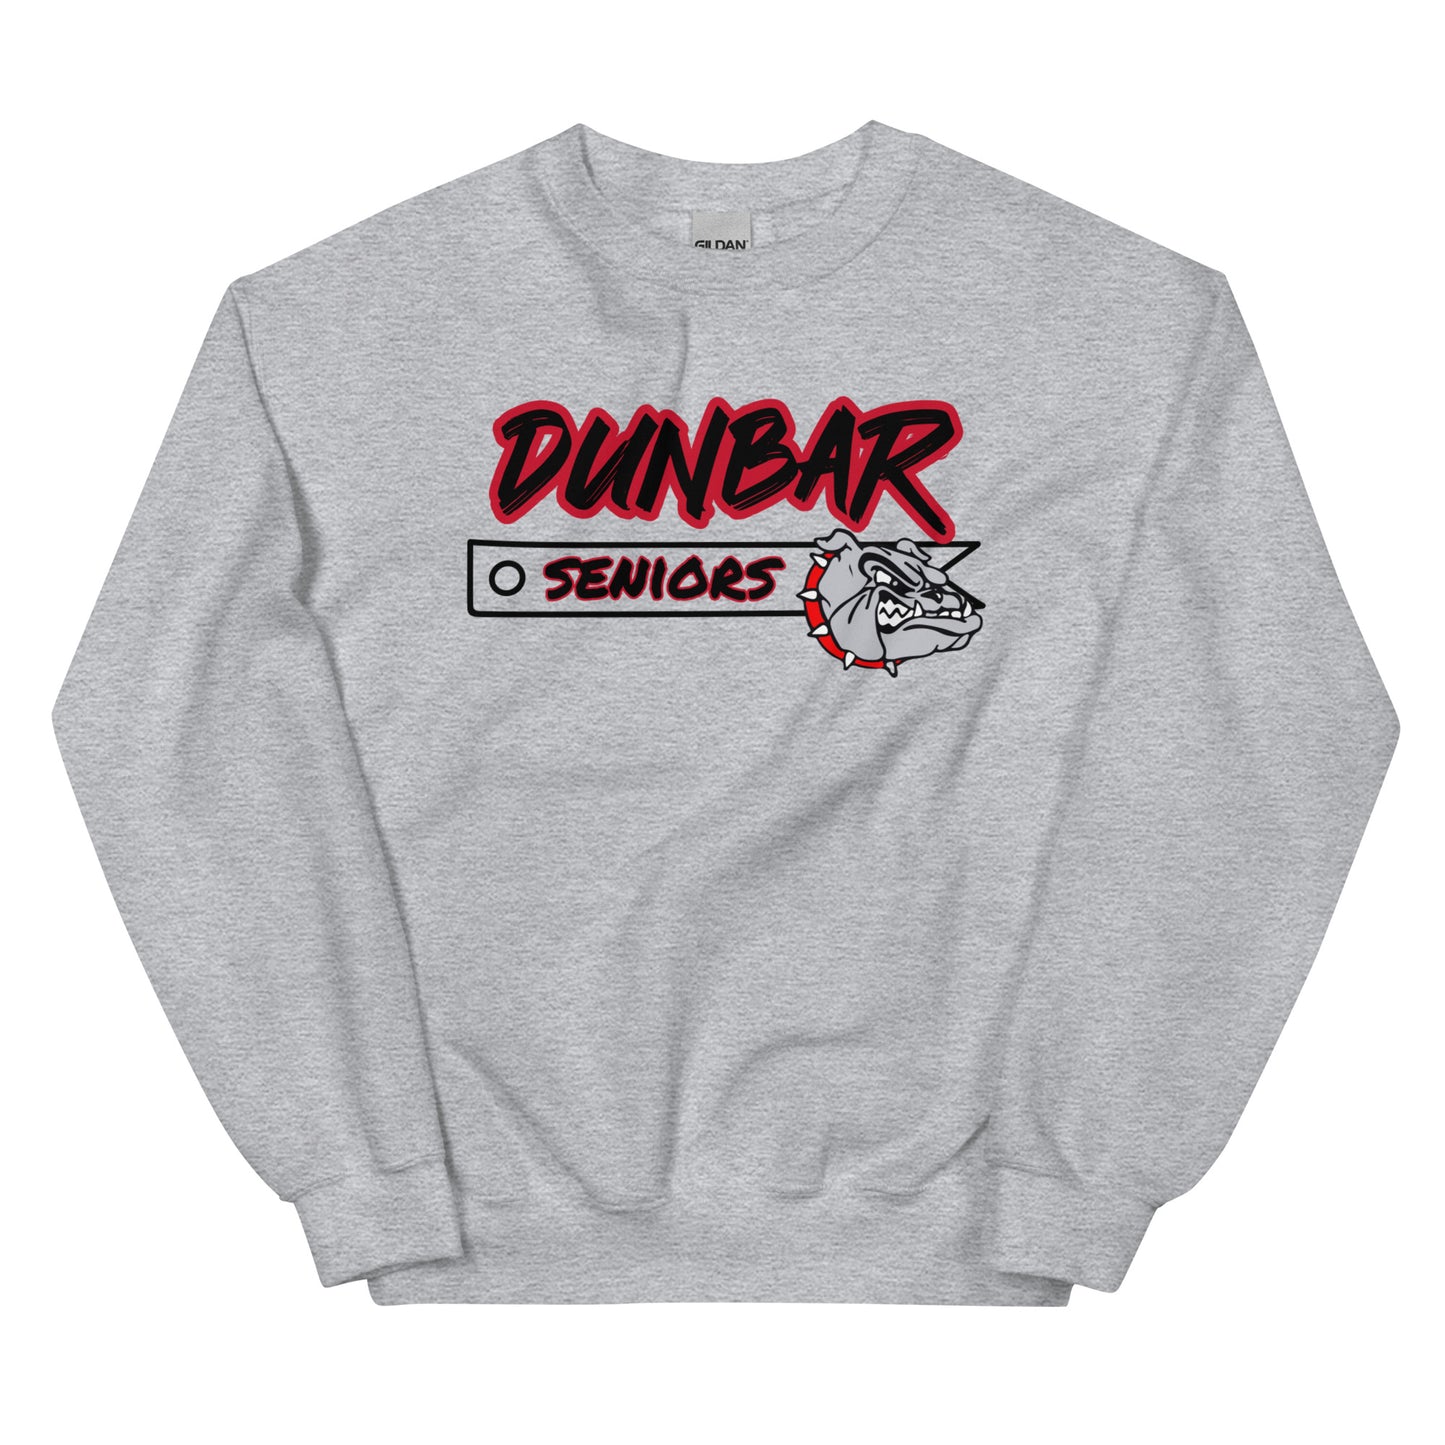 Personalized Crewneck Sweatshirt - Dunbar High School - Classic Logo